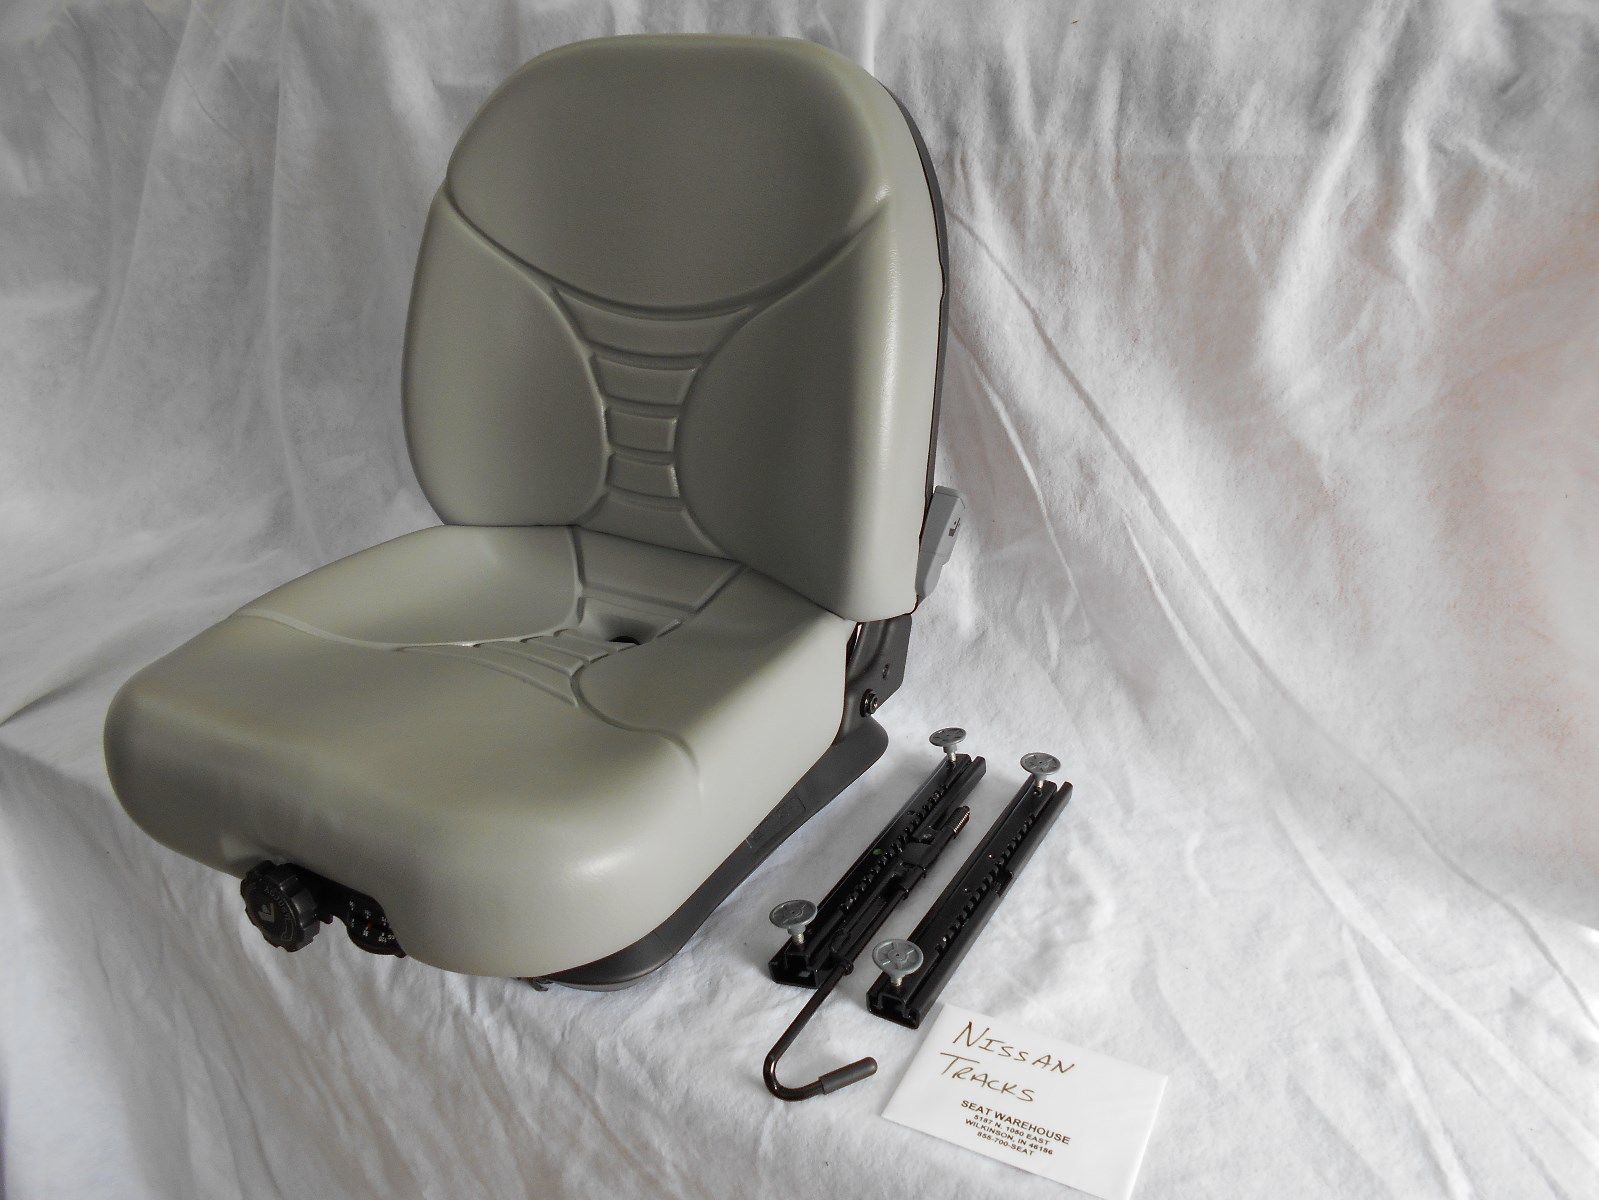 Milsco/Michigan V5300 Original Replacement Bucket Seat Cushion